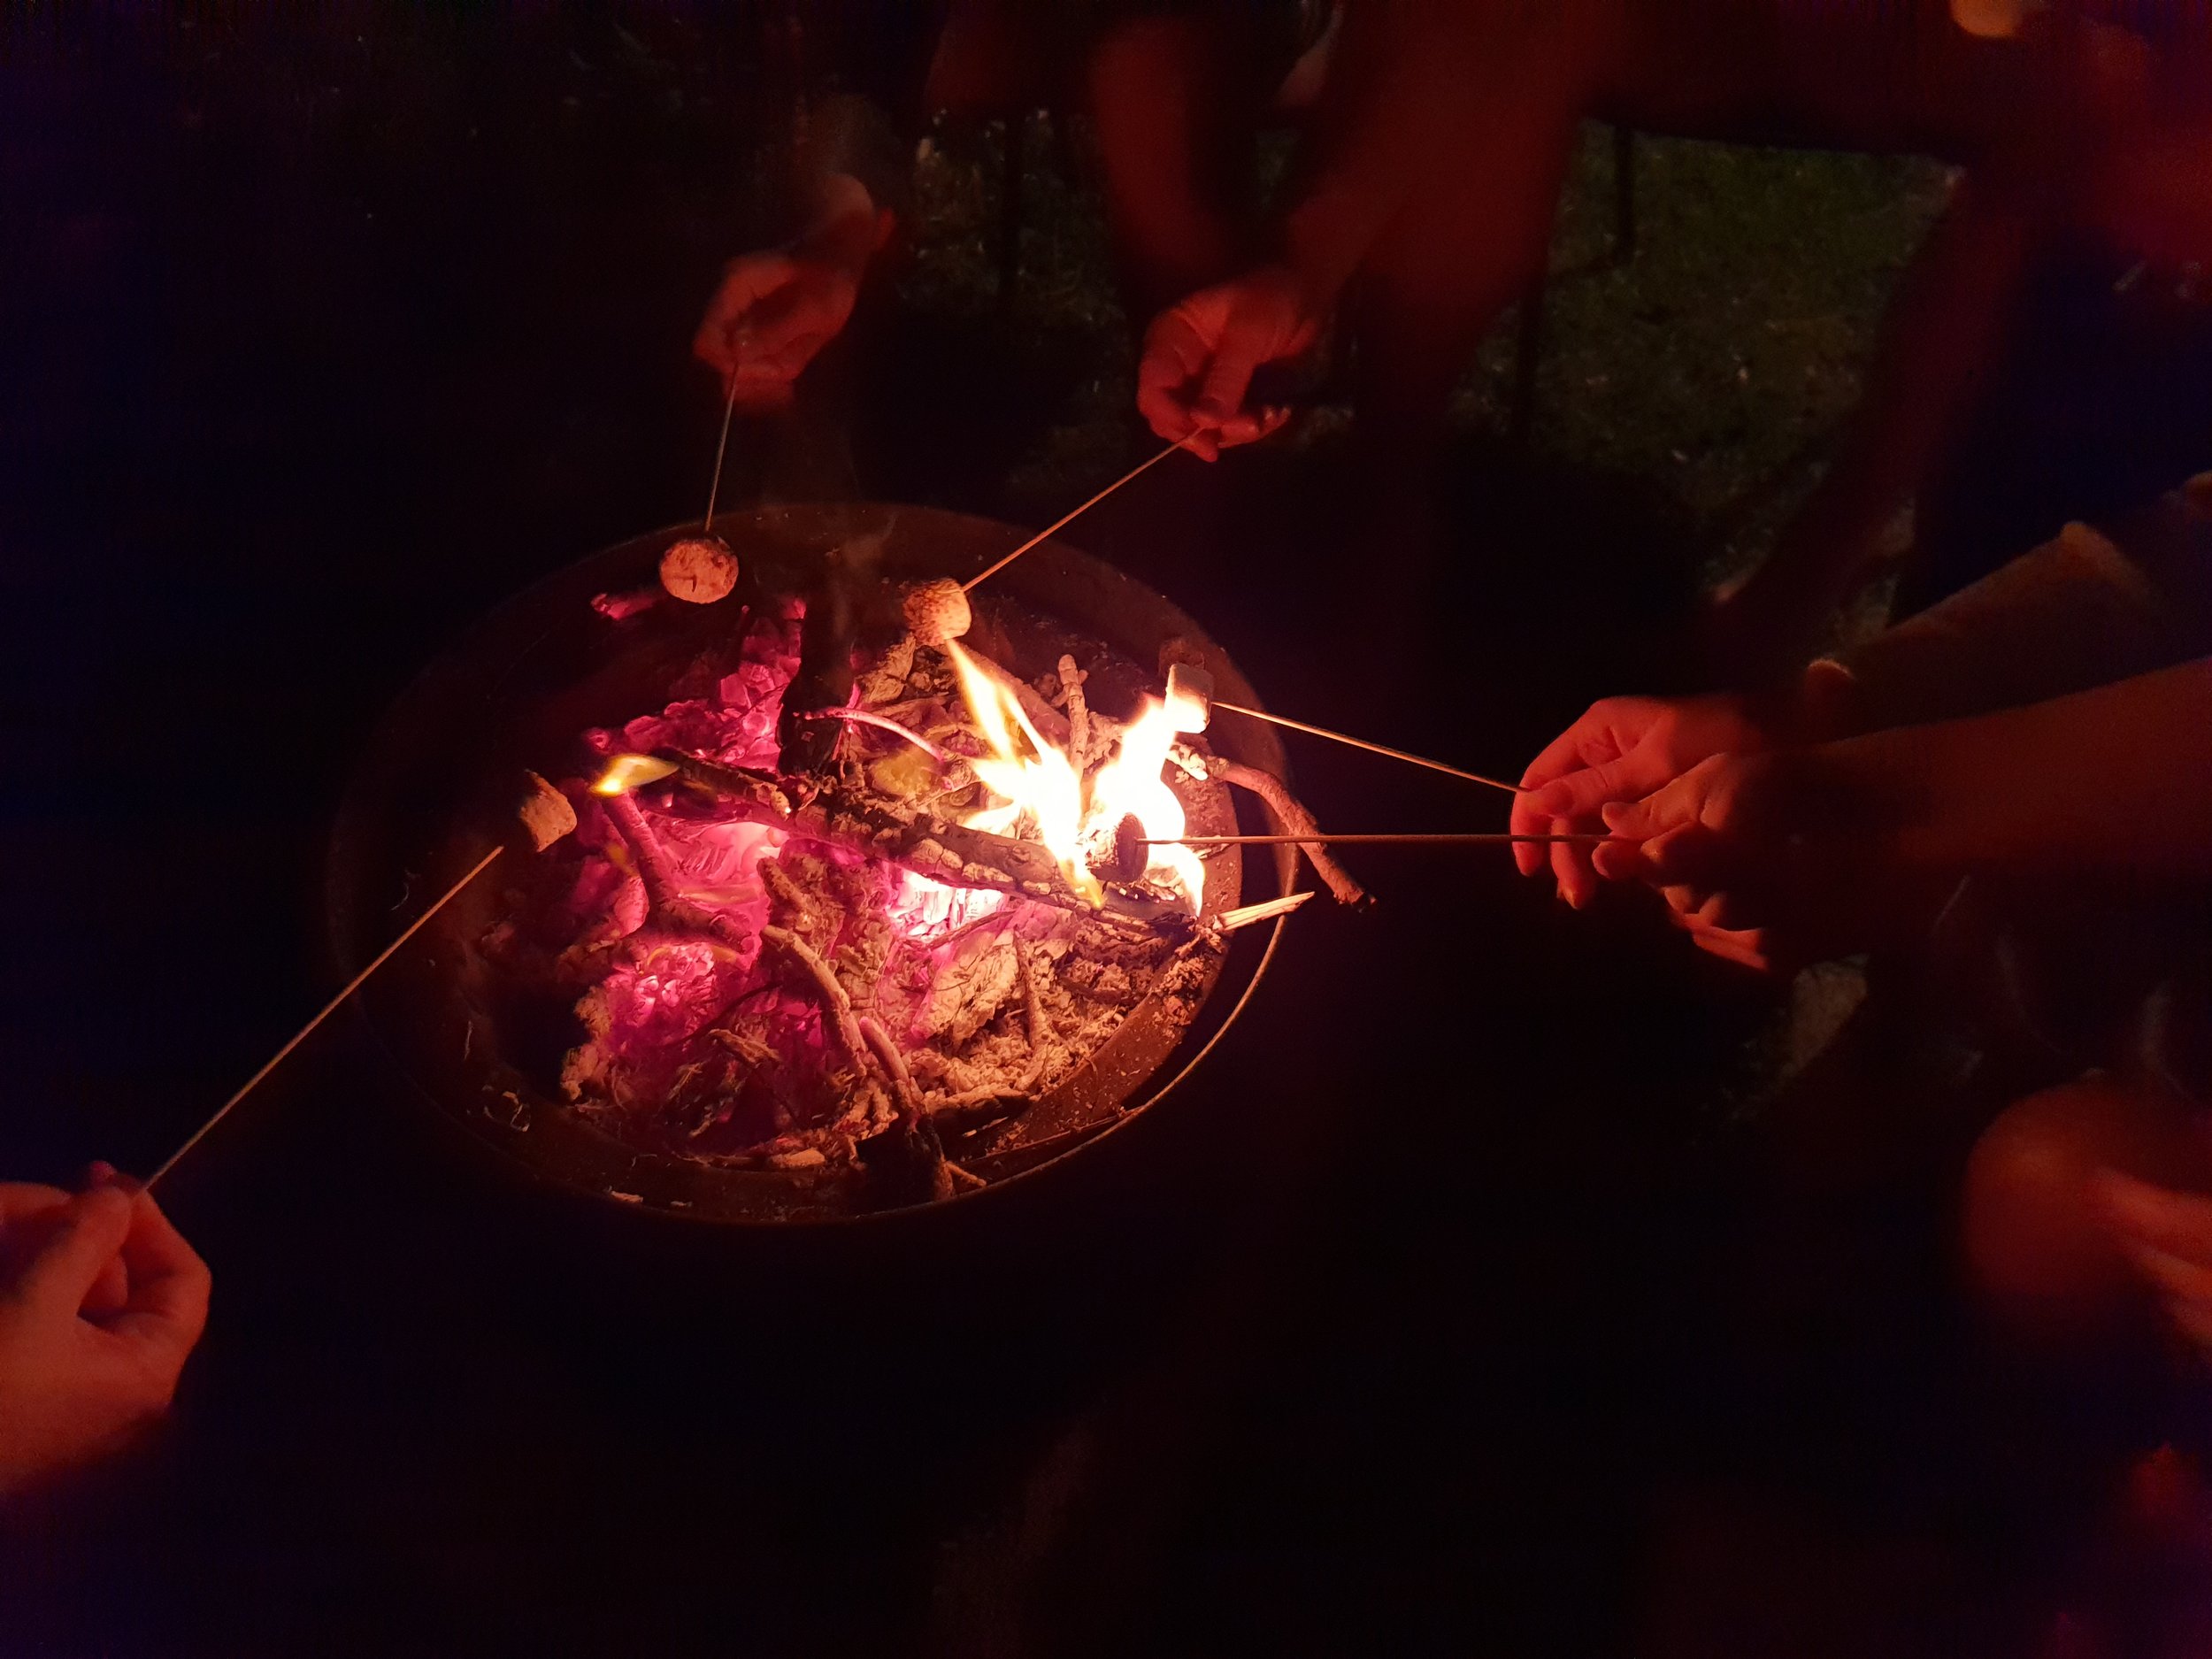 Cooking marshmallows over a backyard fire is always a winner